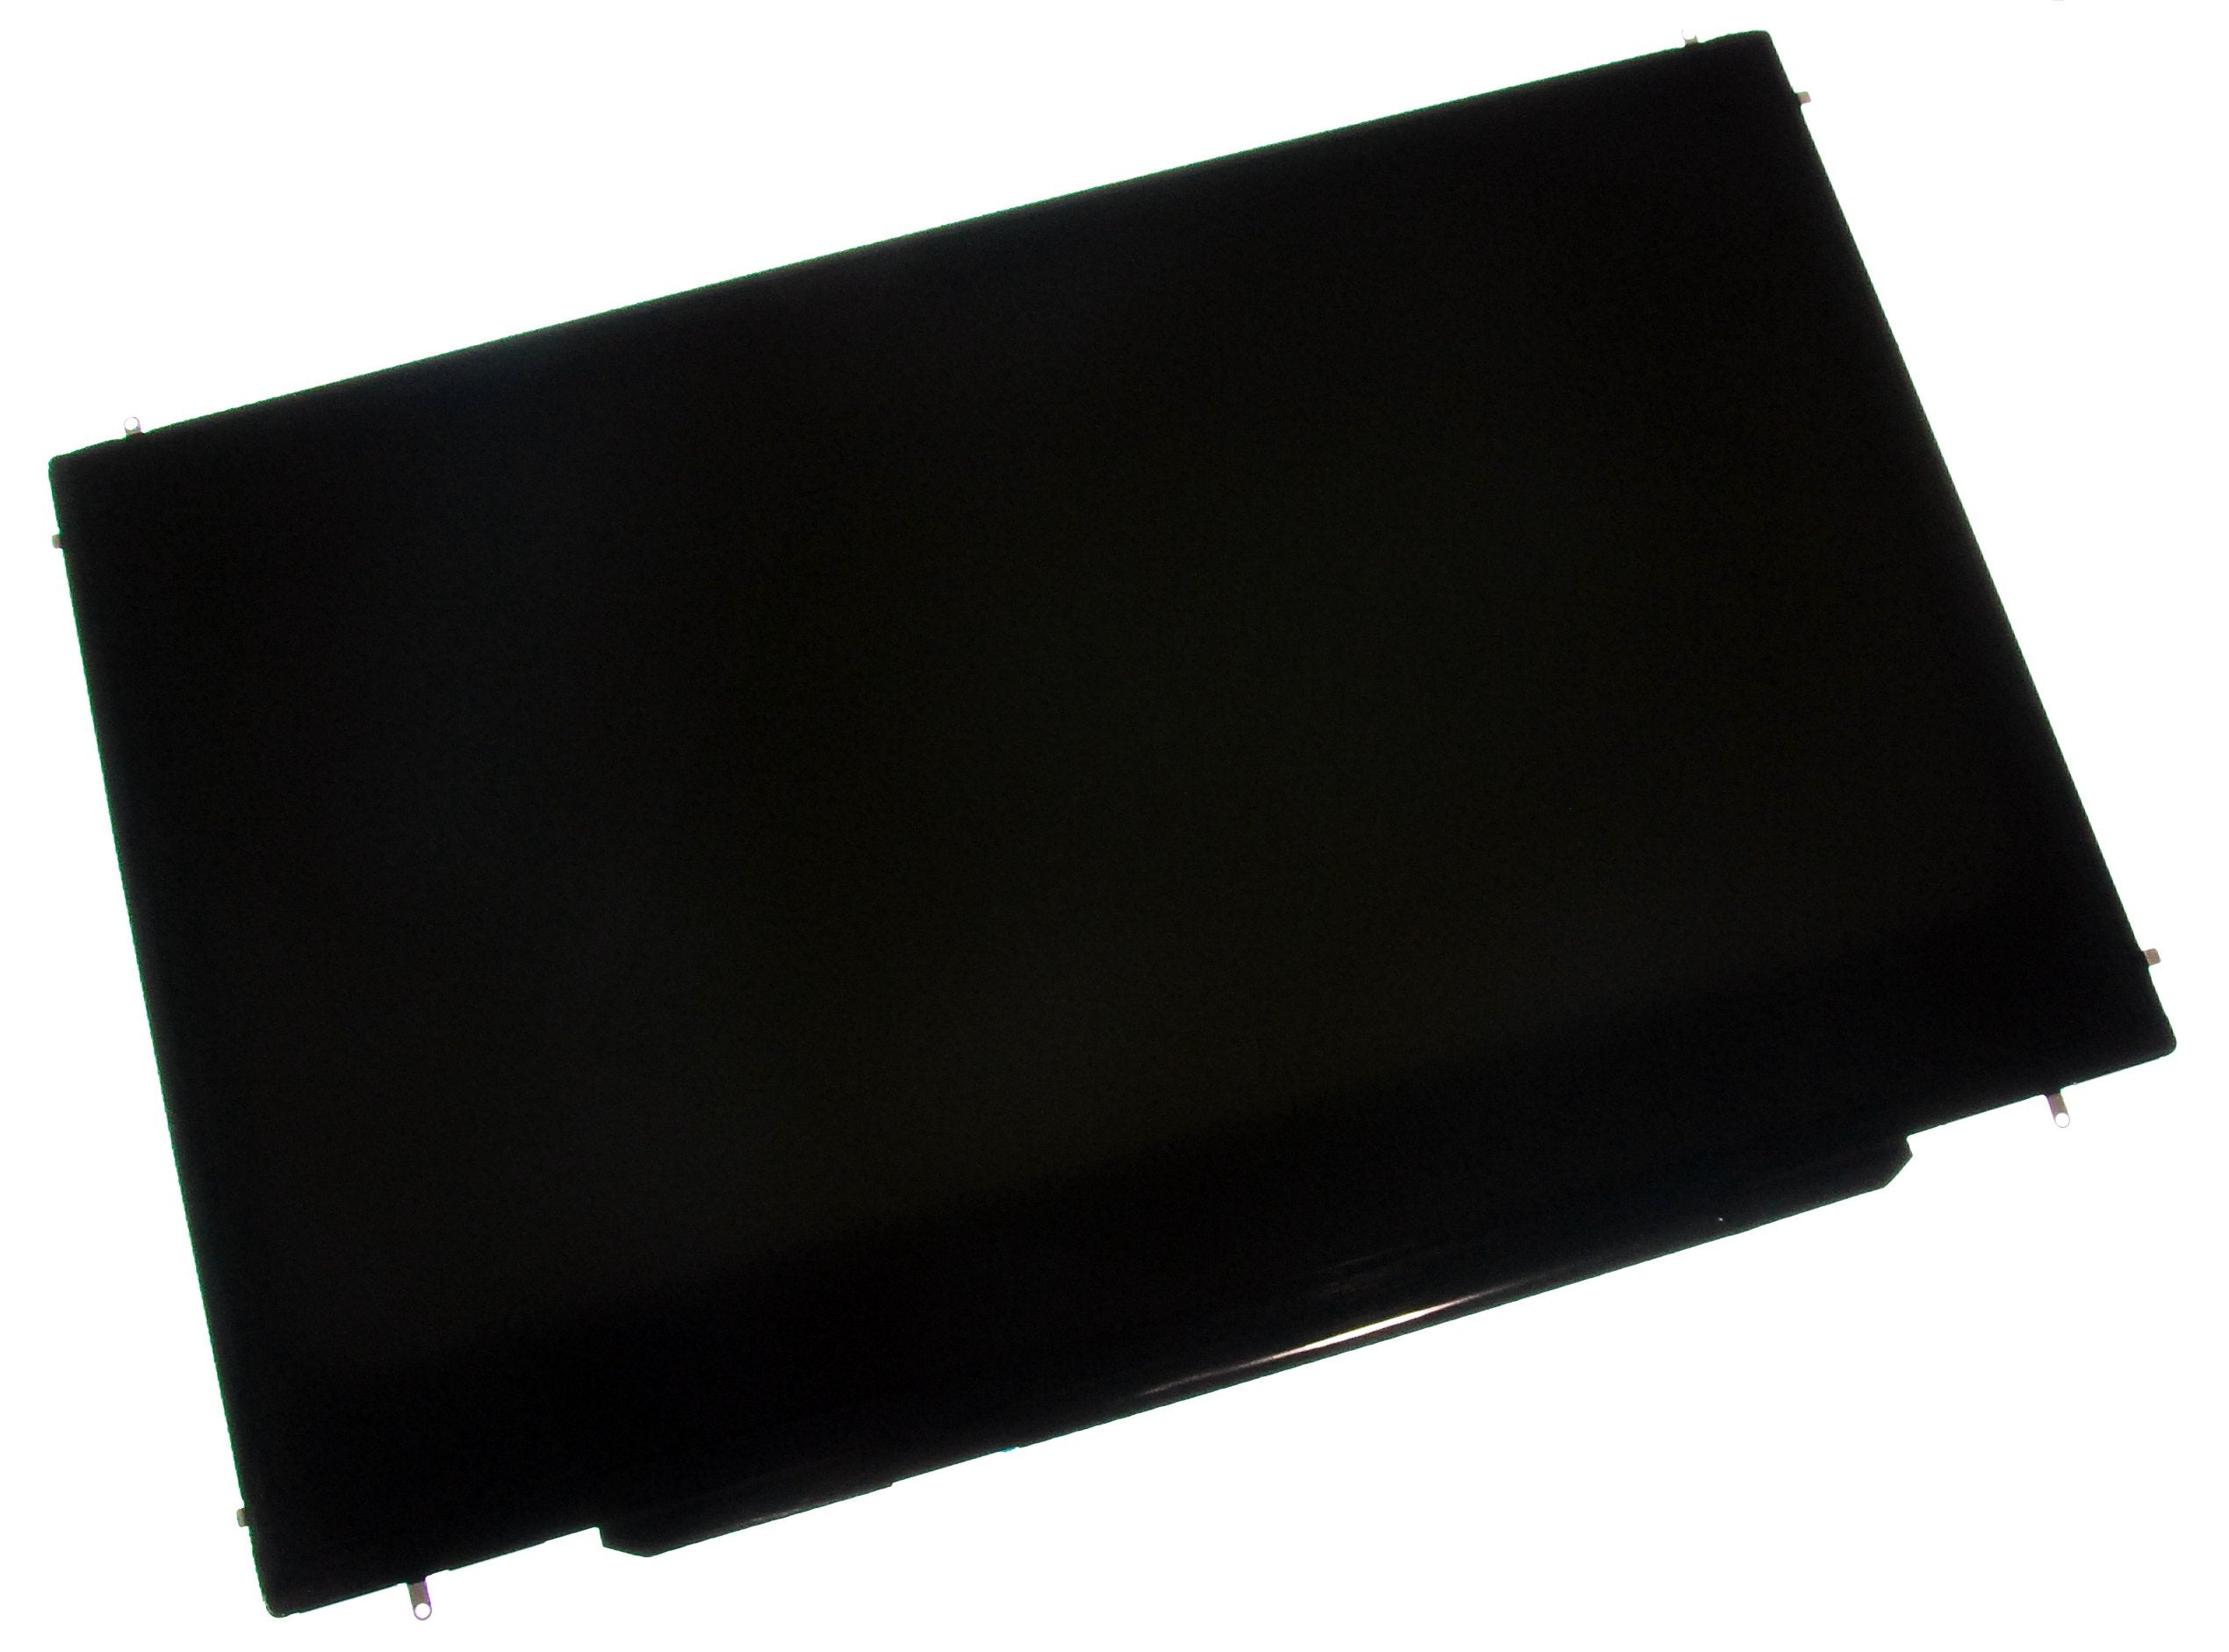 MacBook Pro 17" Unibody LCD Panel